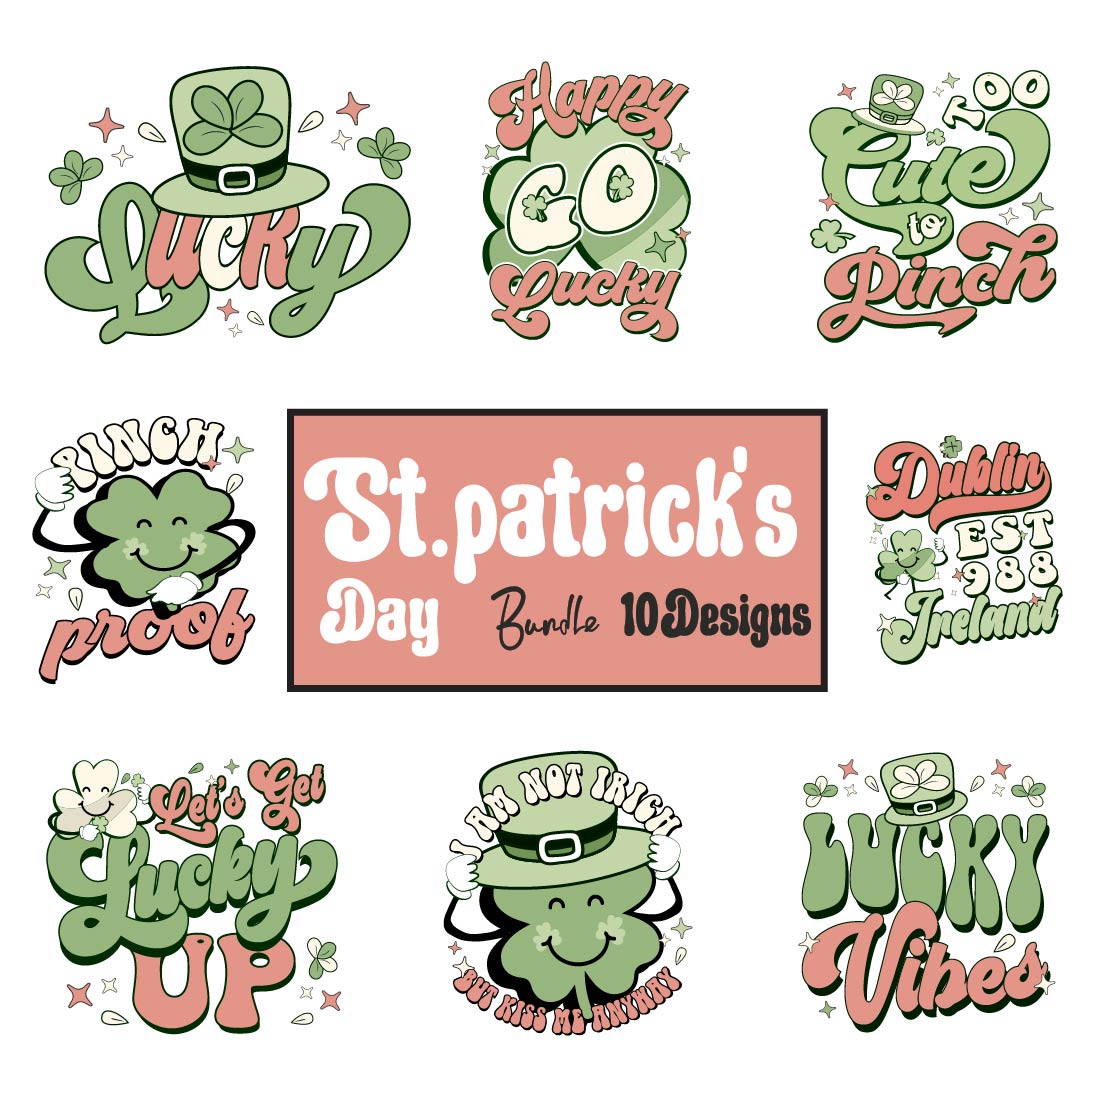 St Patrick’s Day SVG Sublimation Bundle cover image.